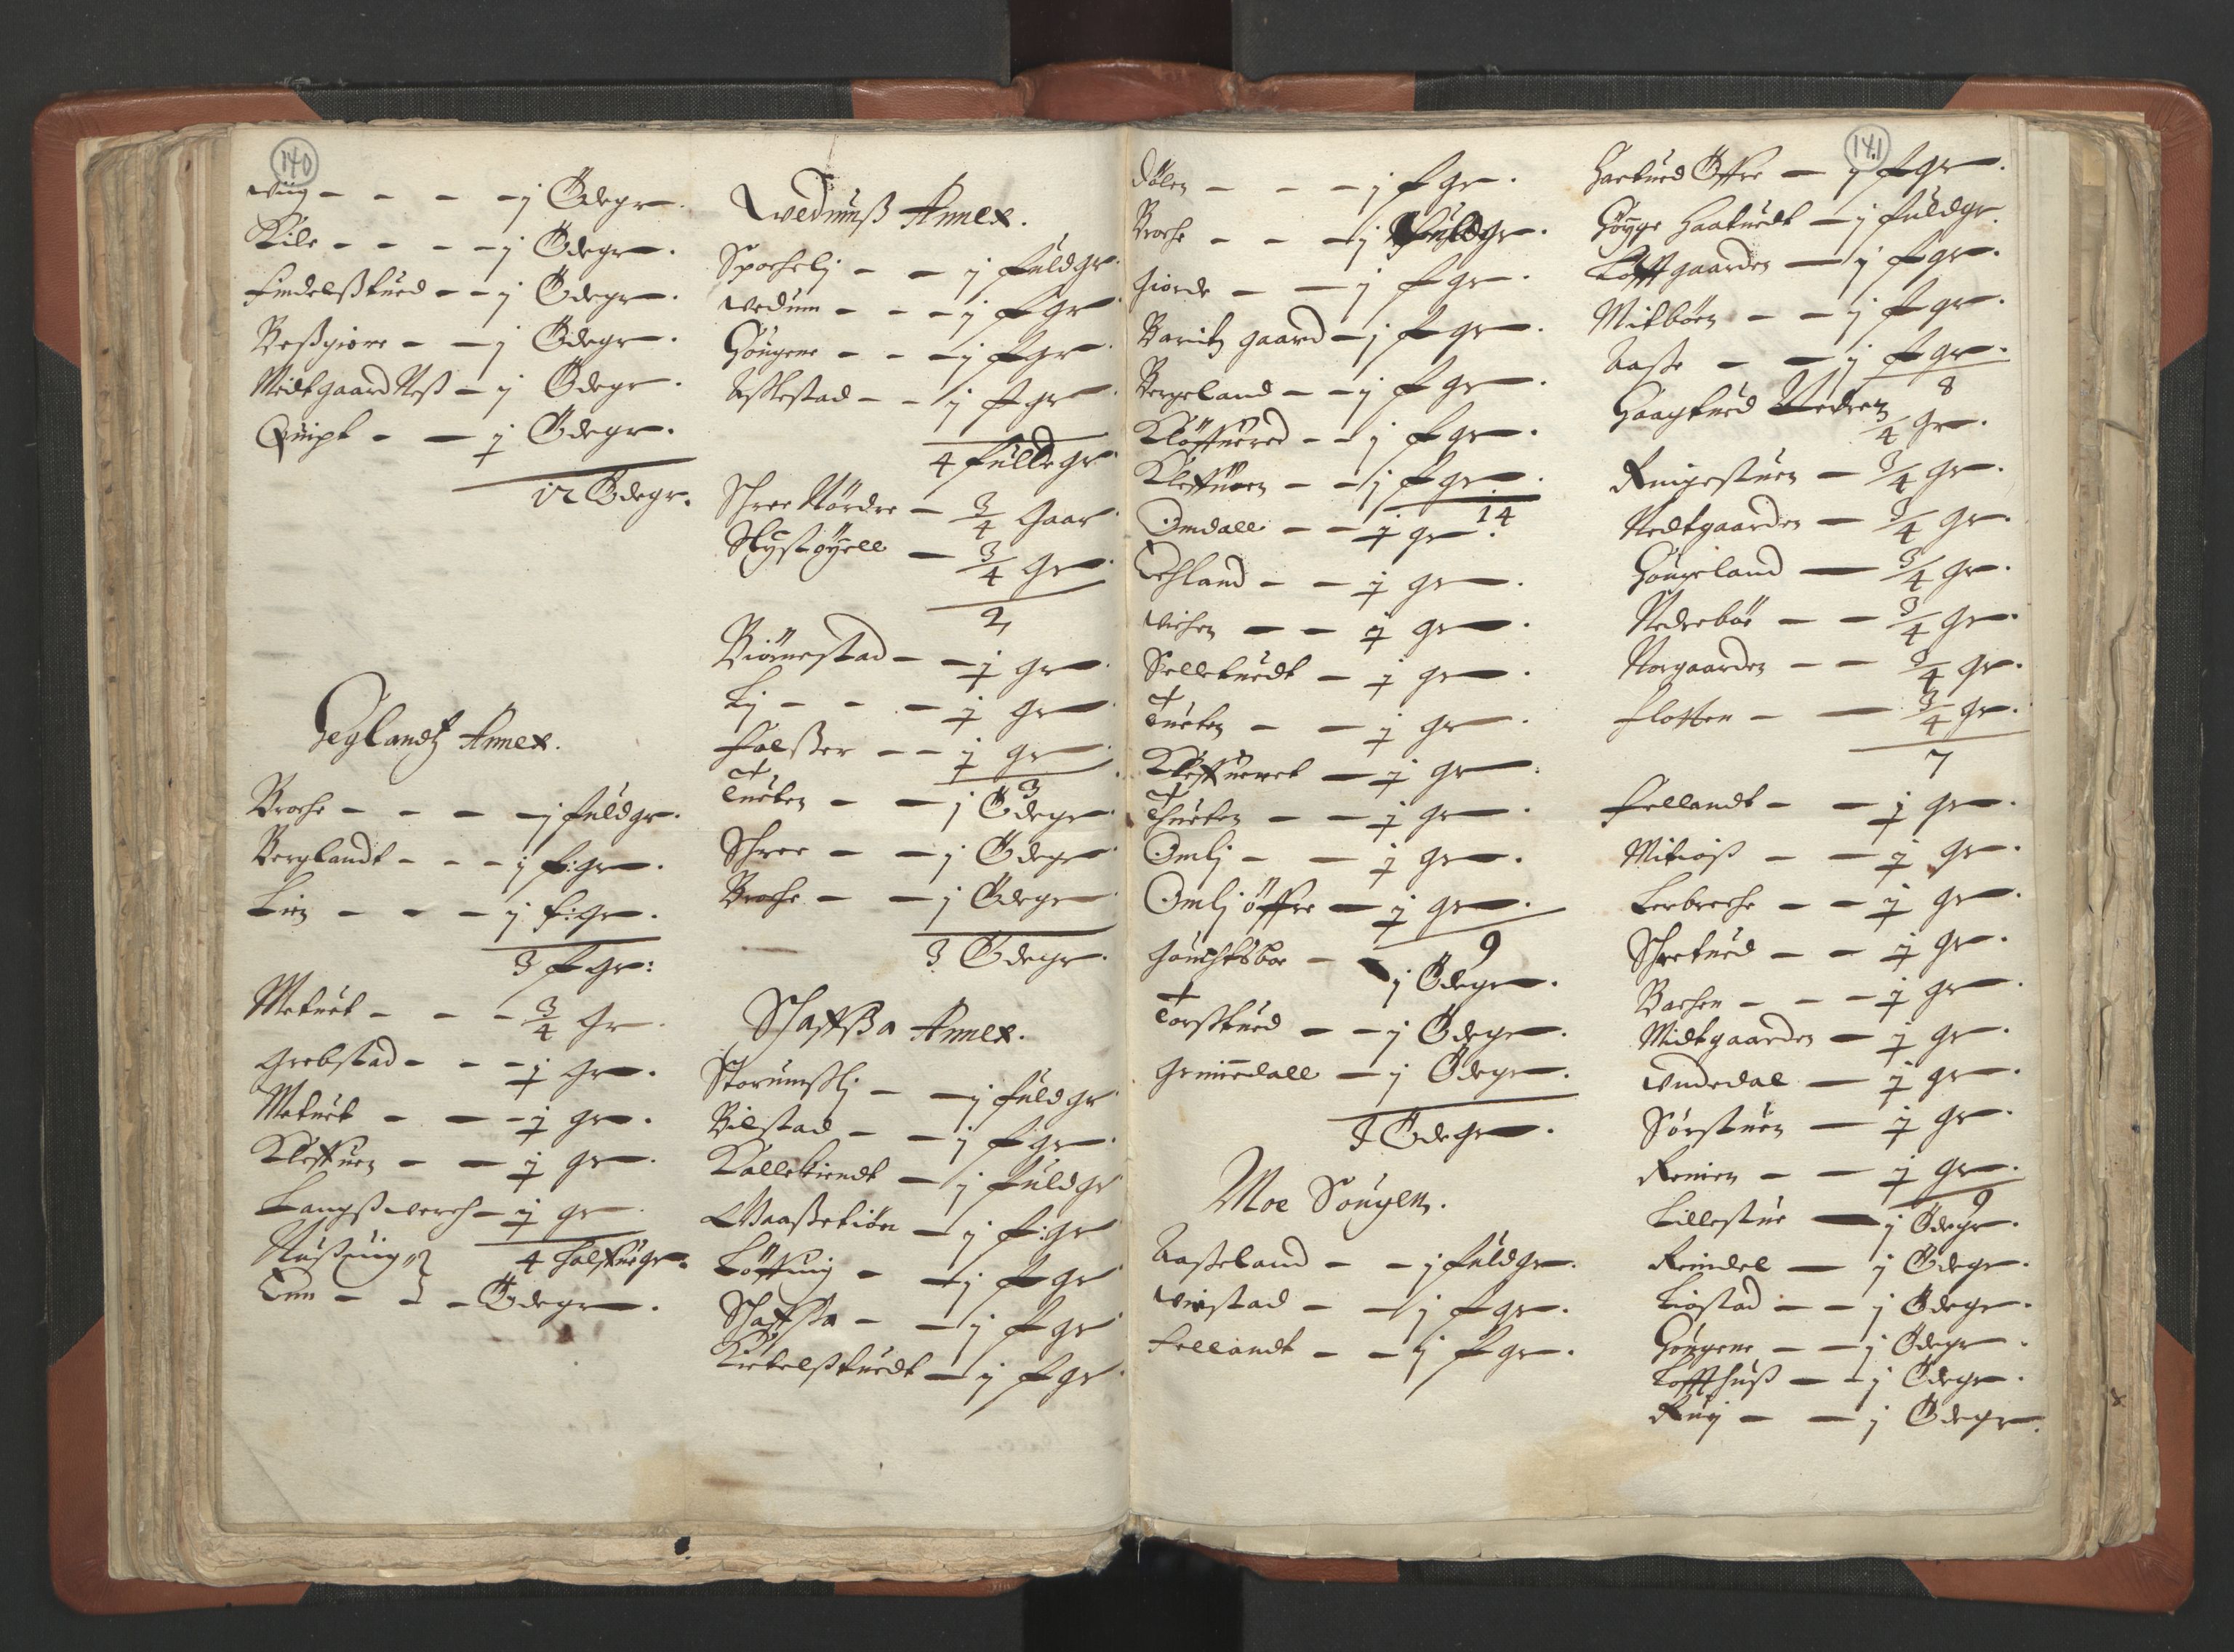 RA, Vicar's Census 1664-1666, no. 12: Øvre Telemark deanery, Nedre Telemark deanery and Bamble deanery, 1664-1666, p. 140-141